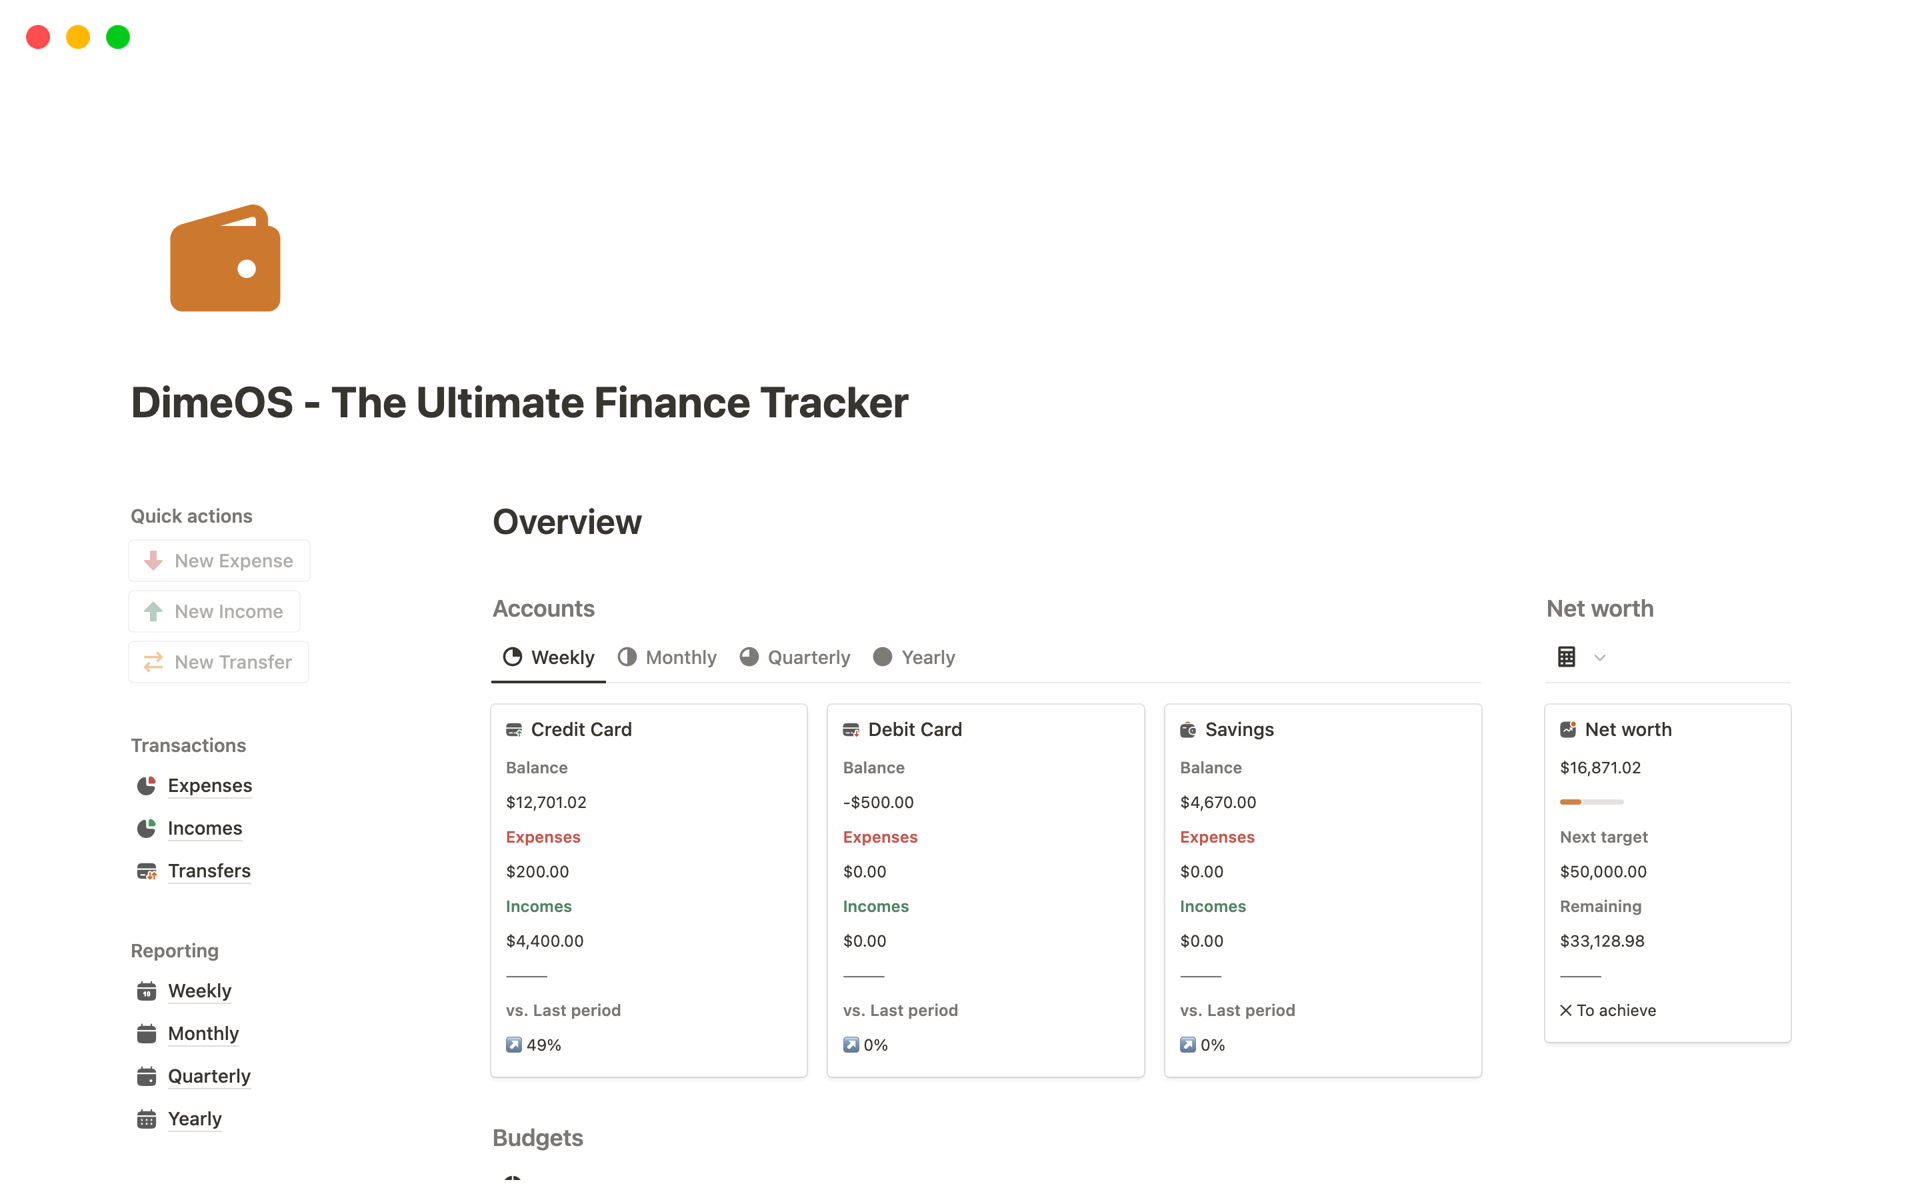 DimeOS - The Ultimate Finance Tracker님의 템플릿 미리보기